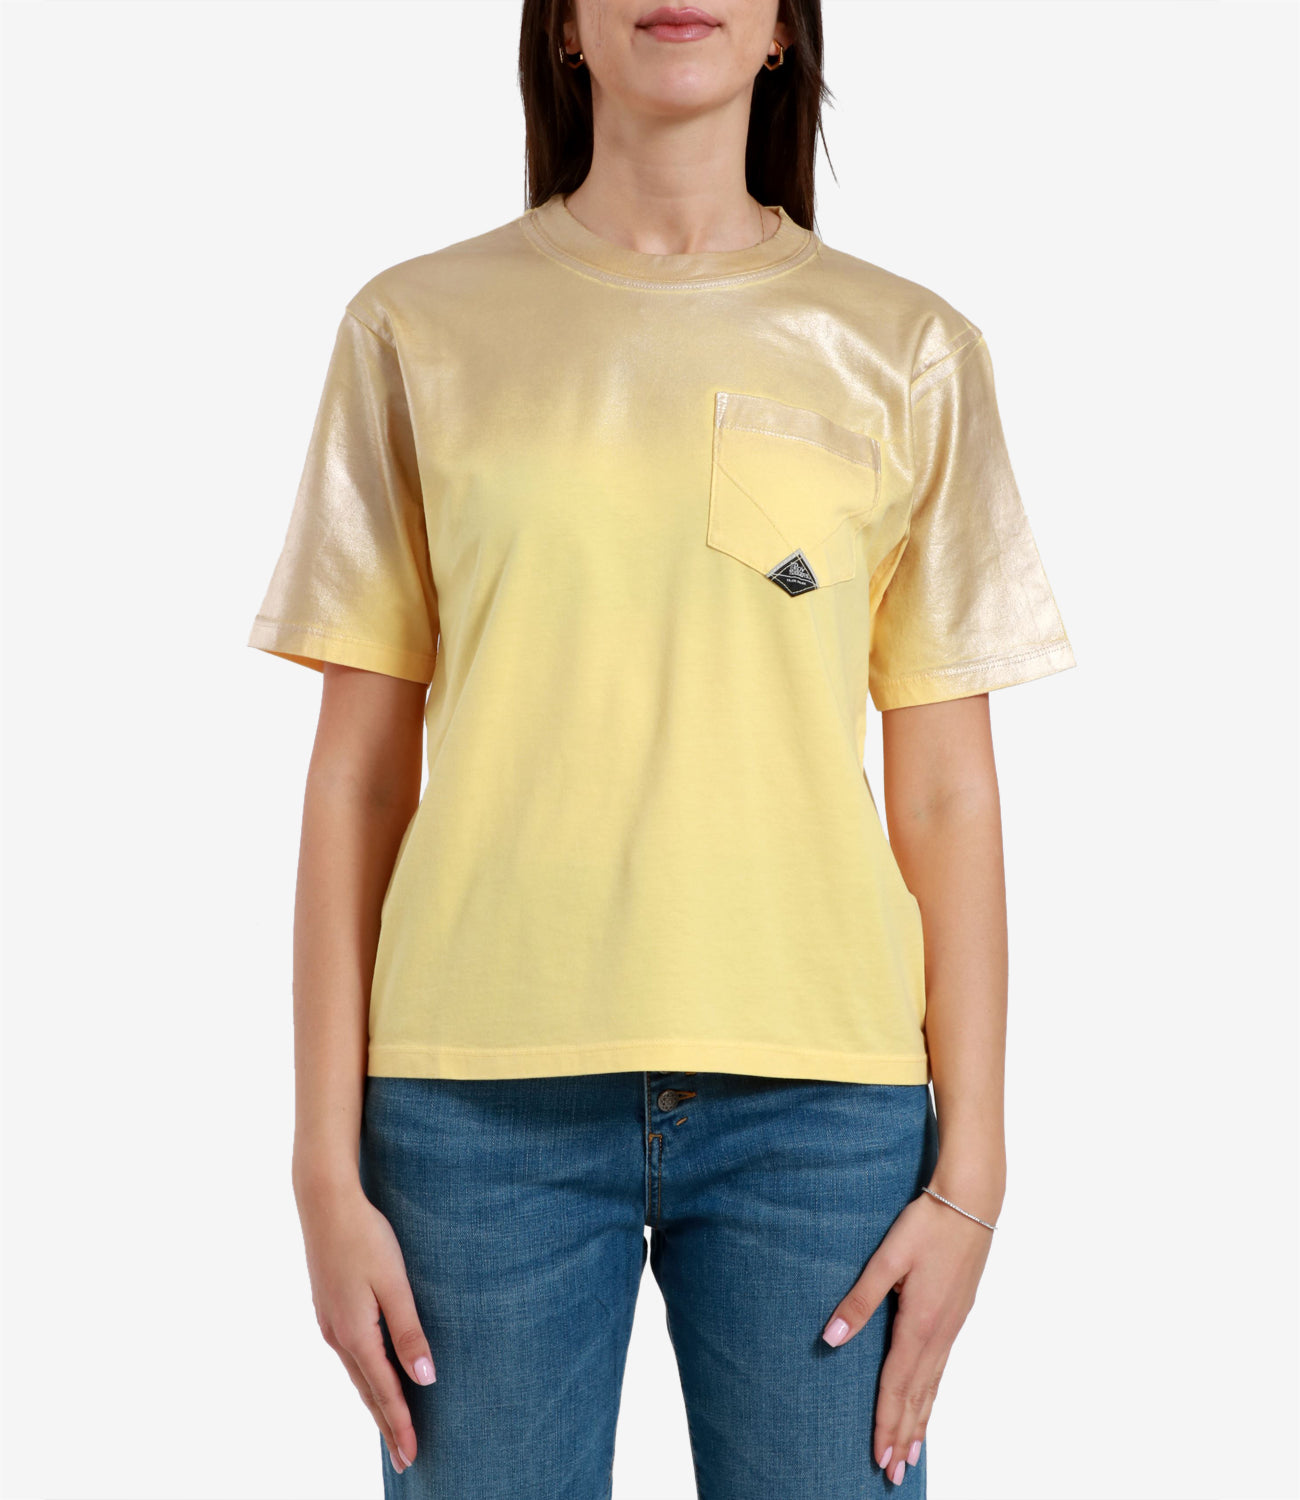 Roy Roger's | T-Shirt Pocket Lamé Yellow